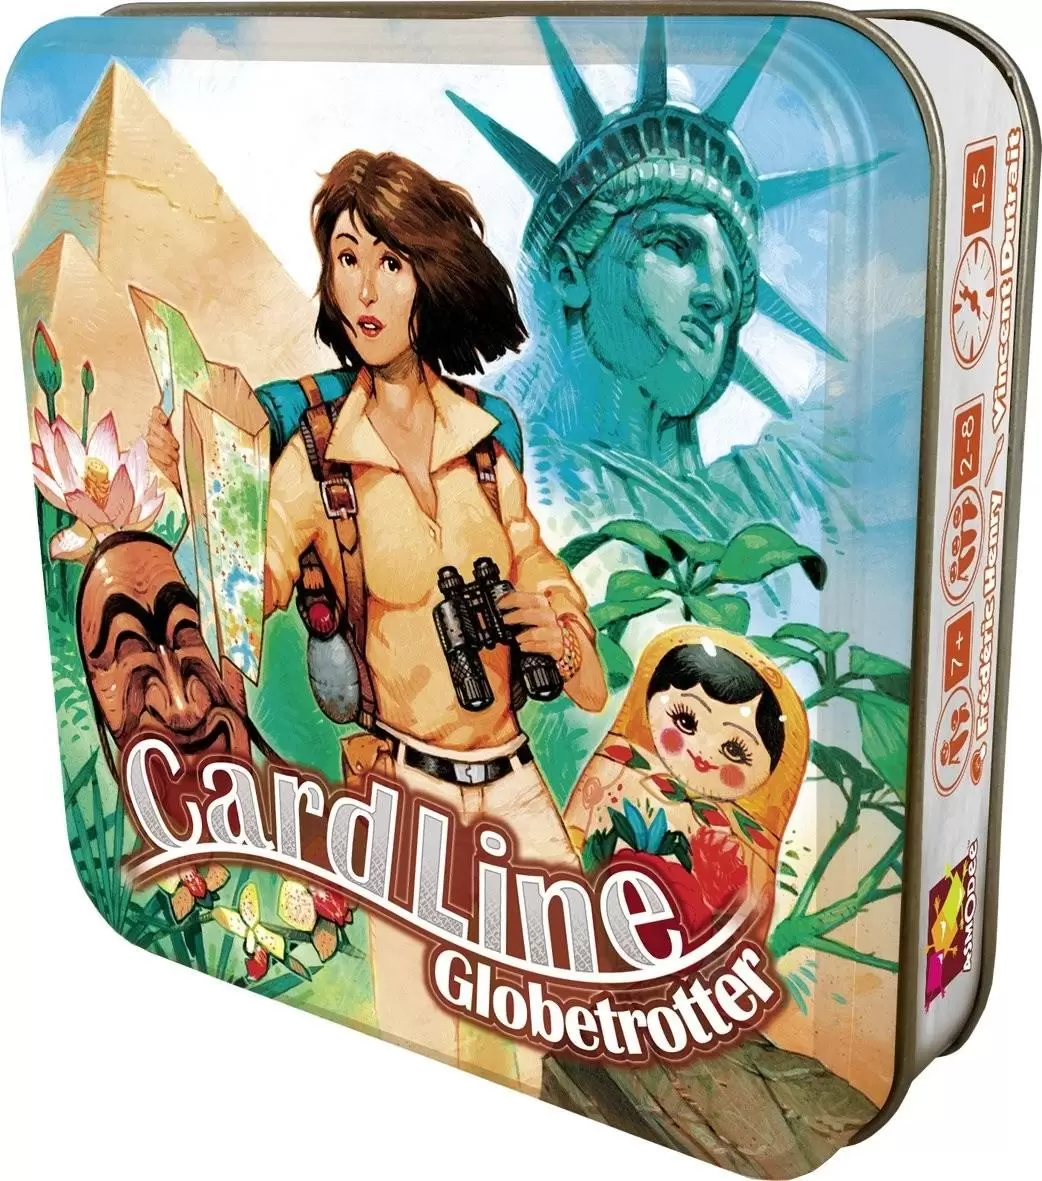 Cardline - Cardline Globetrotter